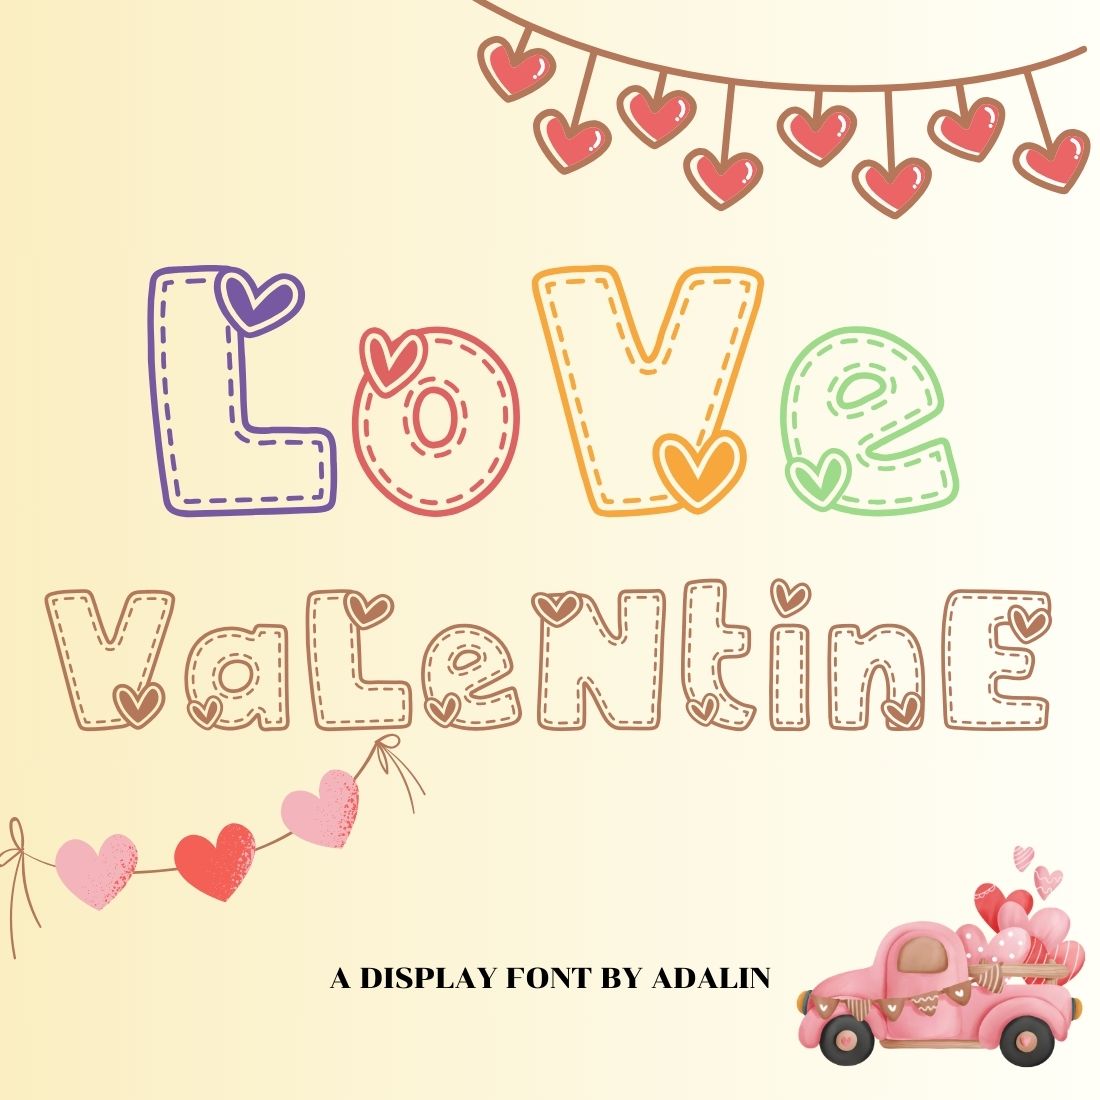 Love Valentine - Display Font cover image.